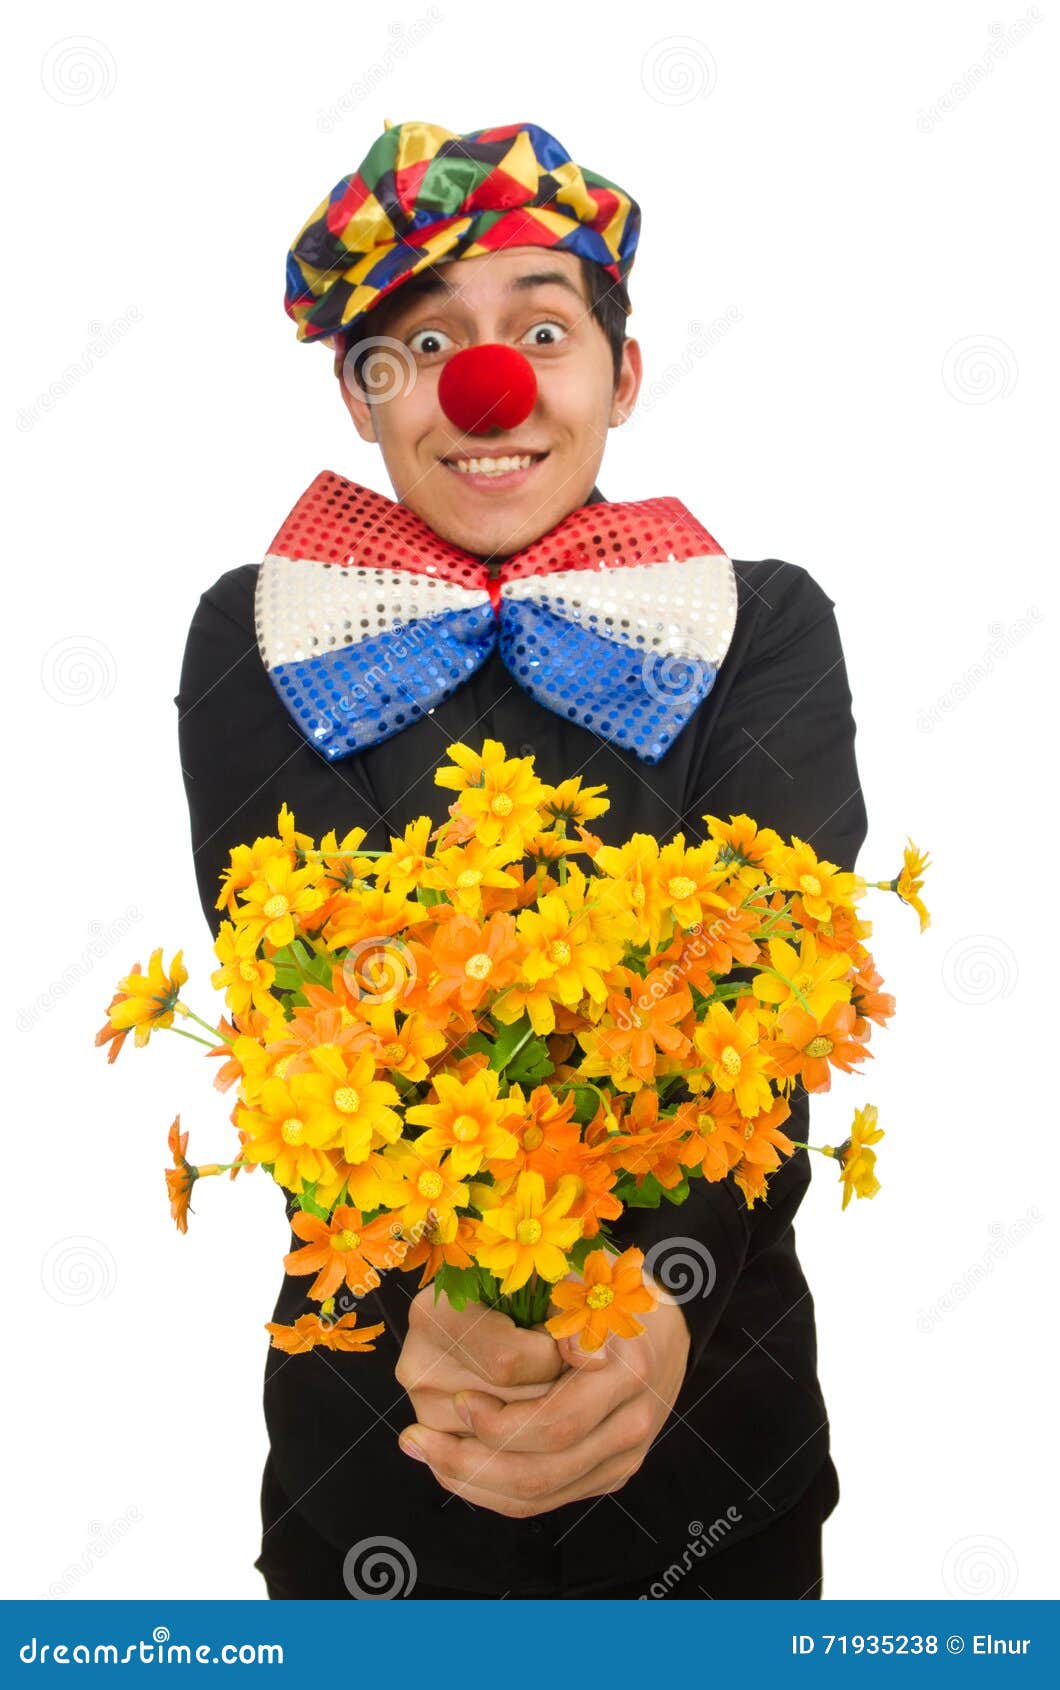 Клоун растение. Клоун с цветами. Клоун с цветочком. Растение клоун. Цветы веселый клоун.